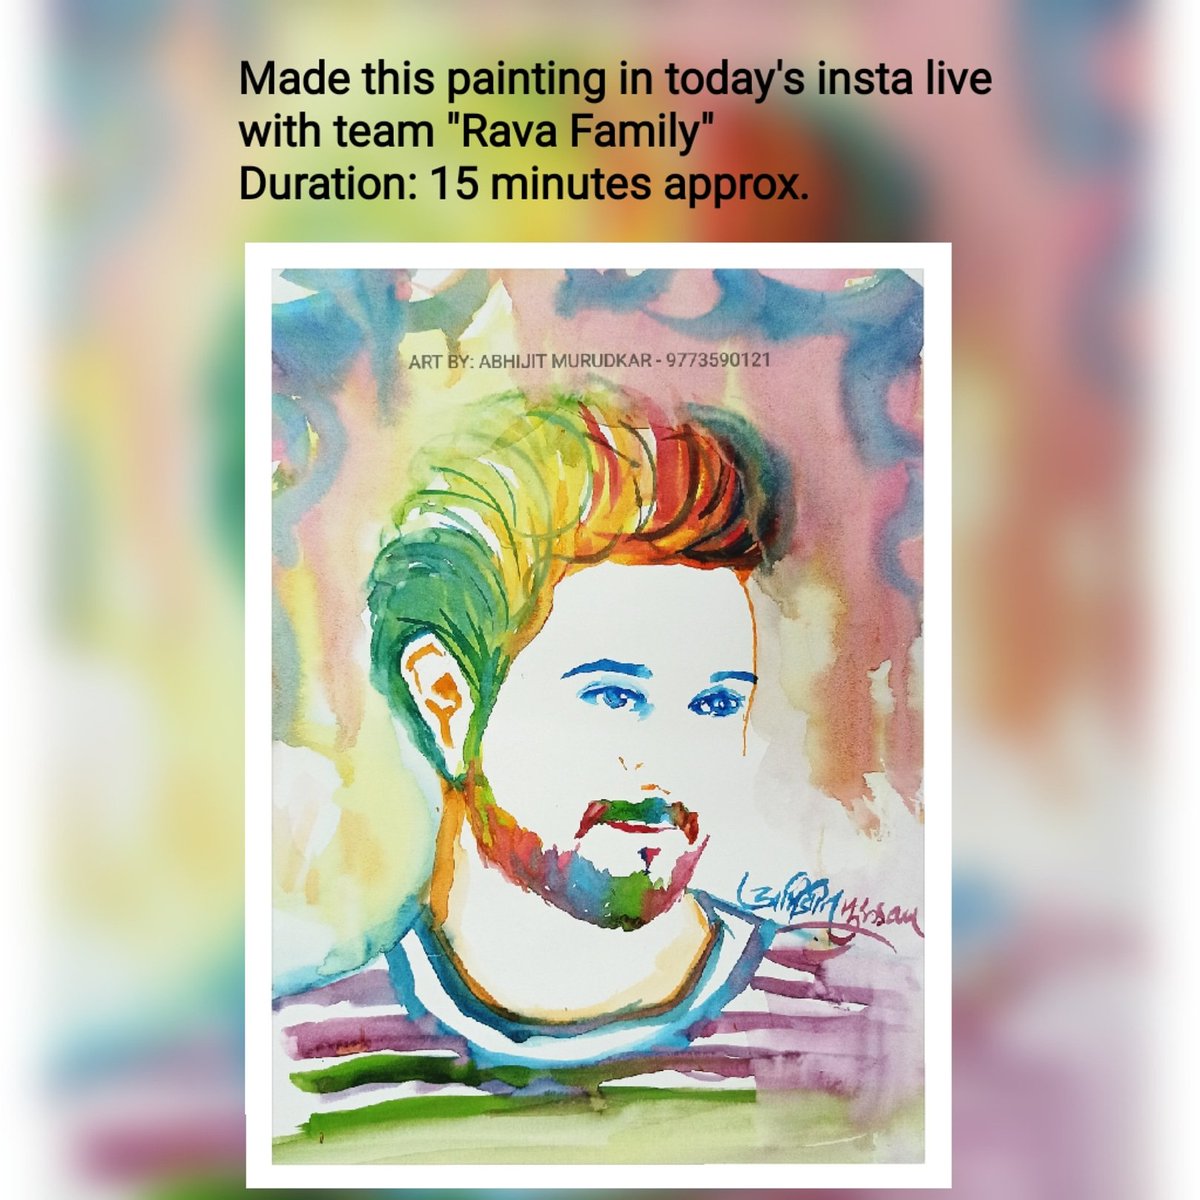 Made this painting in today's insta live with team 'Rava Family'
Duration:15 minutes app.
#QuckSketch #painting 
#watercolors #illustration #saraswatiarts #saraswati_arts #portrait #abhijitmurudkar #abhijit_murudkar #art #artist #SwapnilJoshi @swwapniljoshi @RAVA_Family